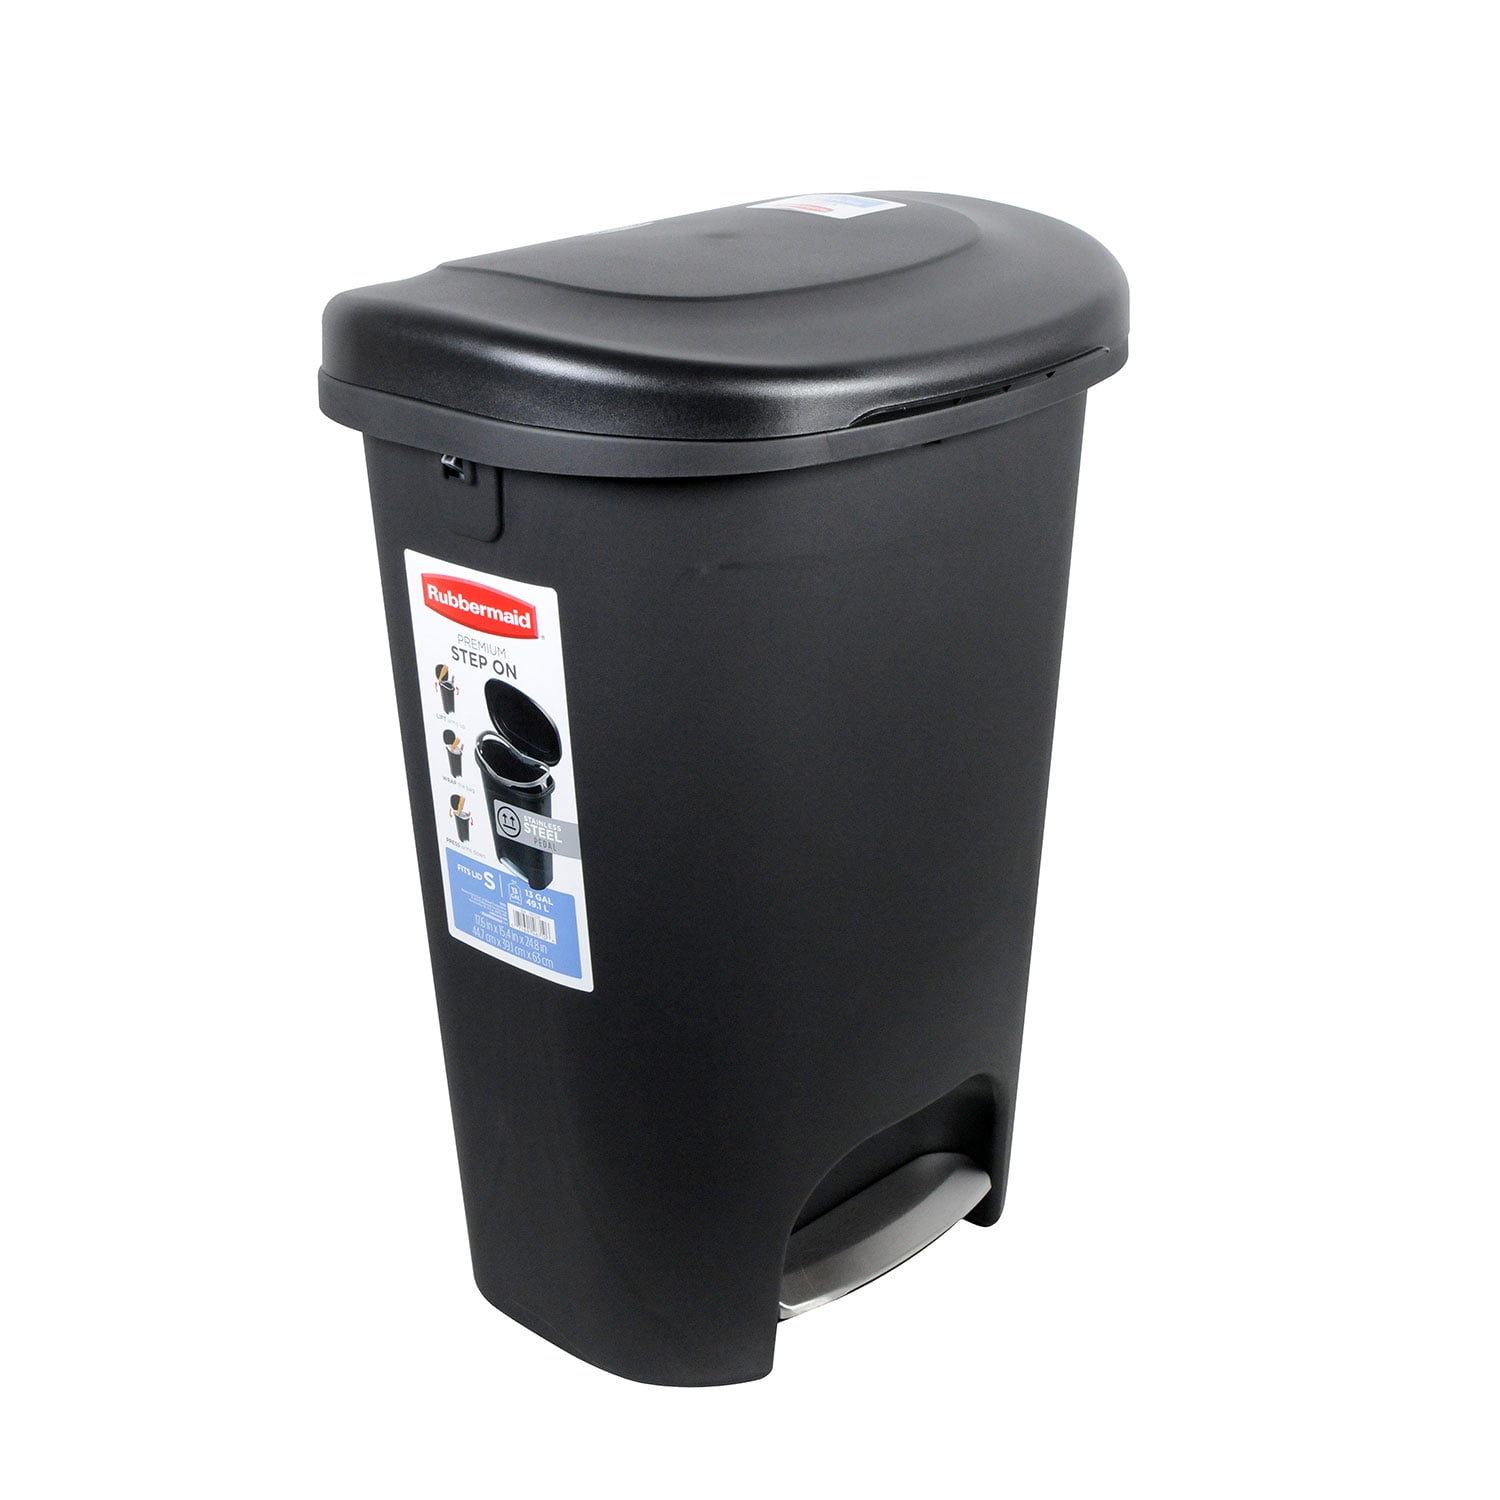 RUBBERMAID Black Foot Pedal Trash Can 13 Gallon Garbage Bin Waste